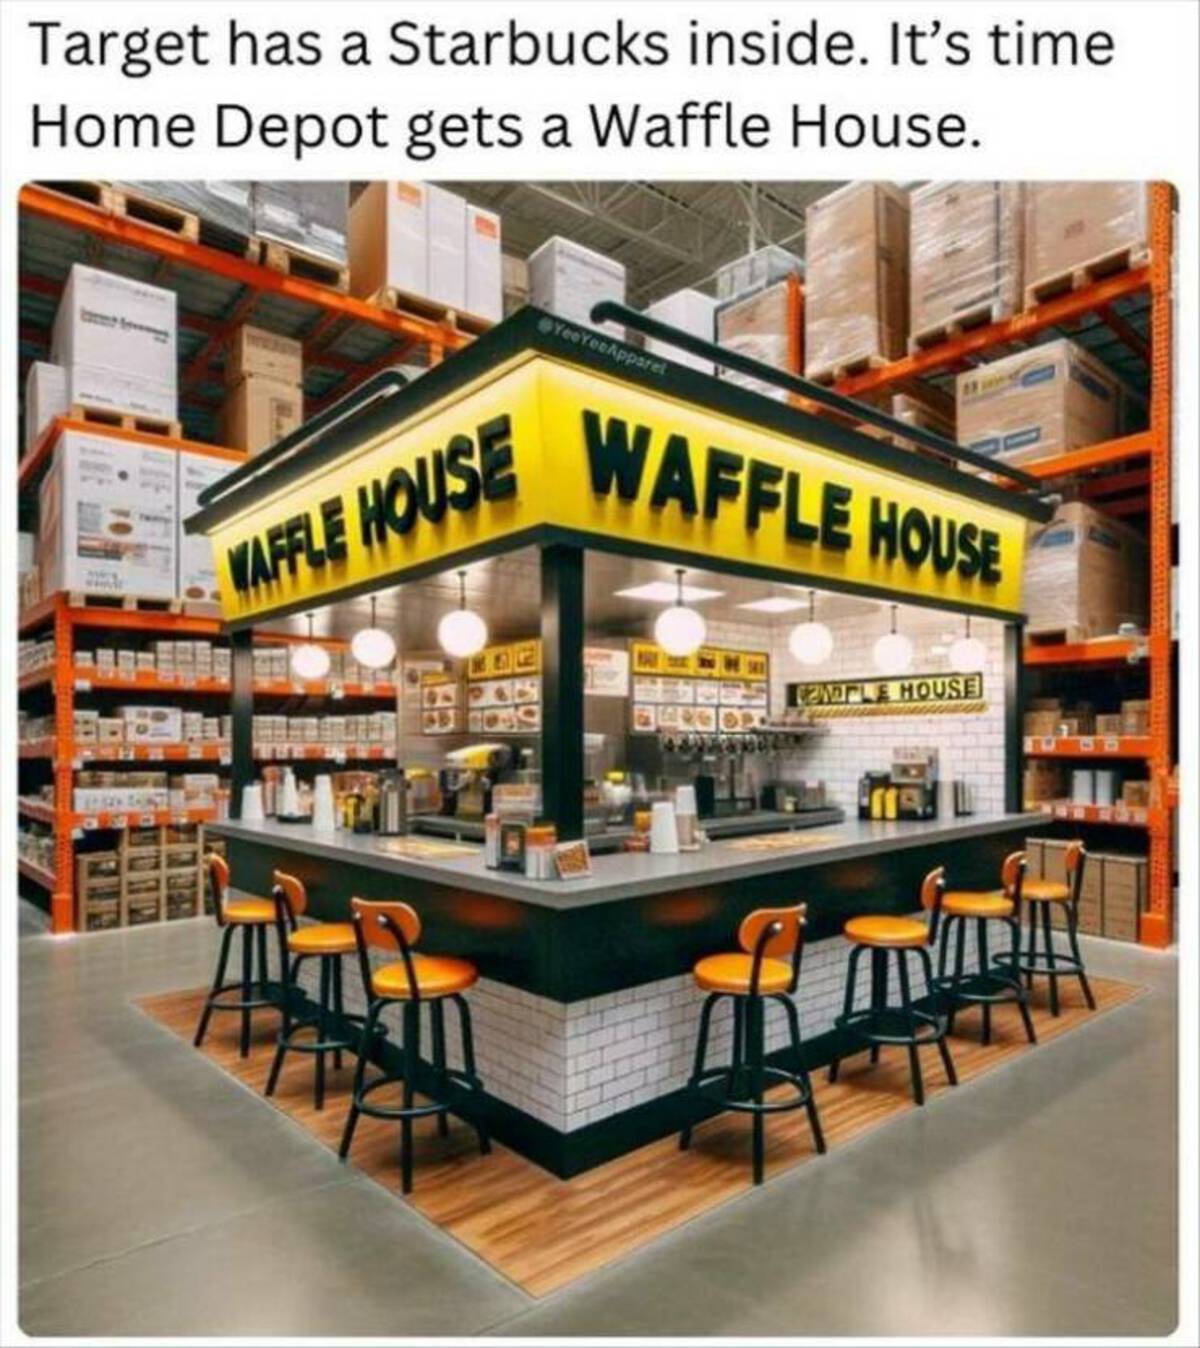 retail - Target has a Starbucks inside. It's time Home Depot gets a Waffle House. 88 Waffle House 812 YeeYeeApparel Waffle House Comple House